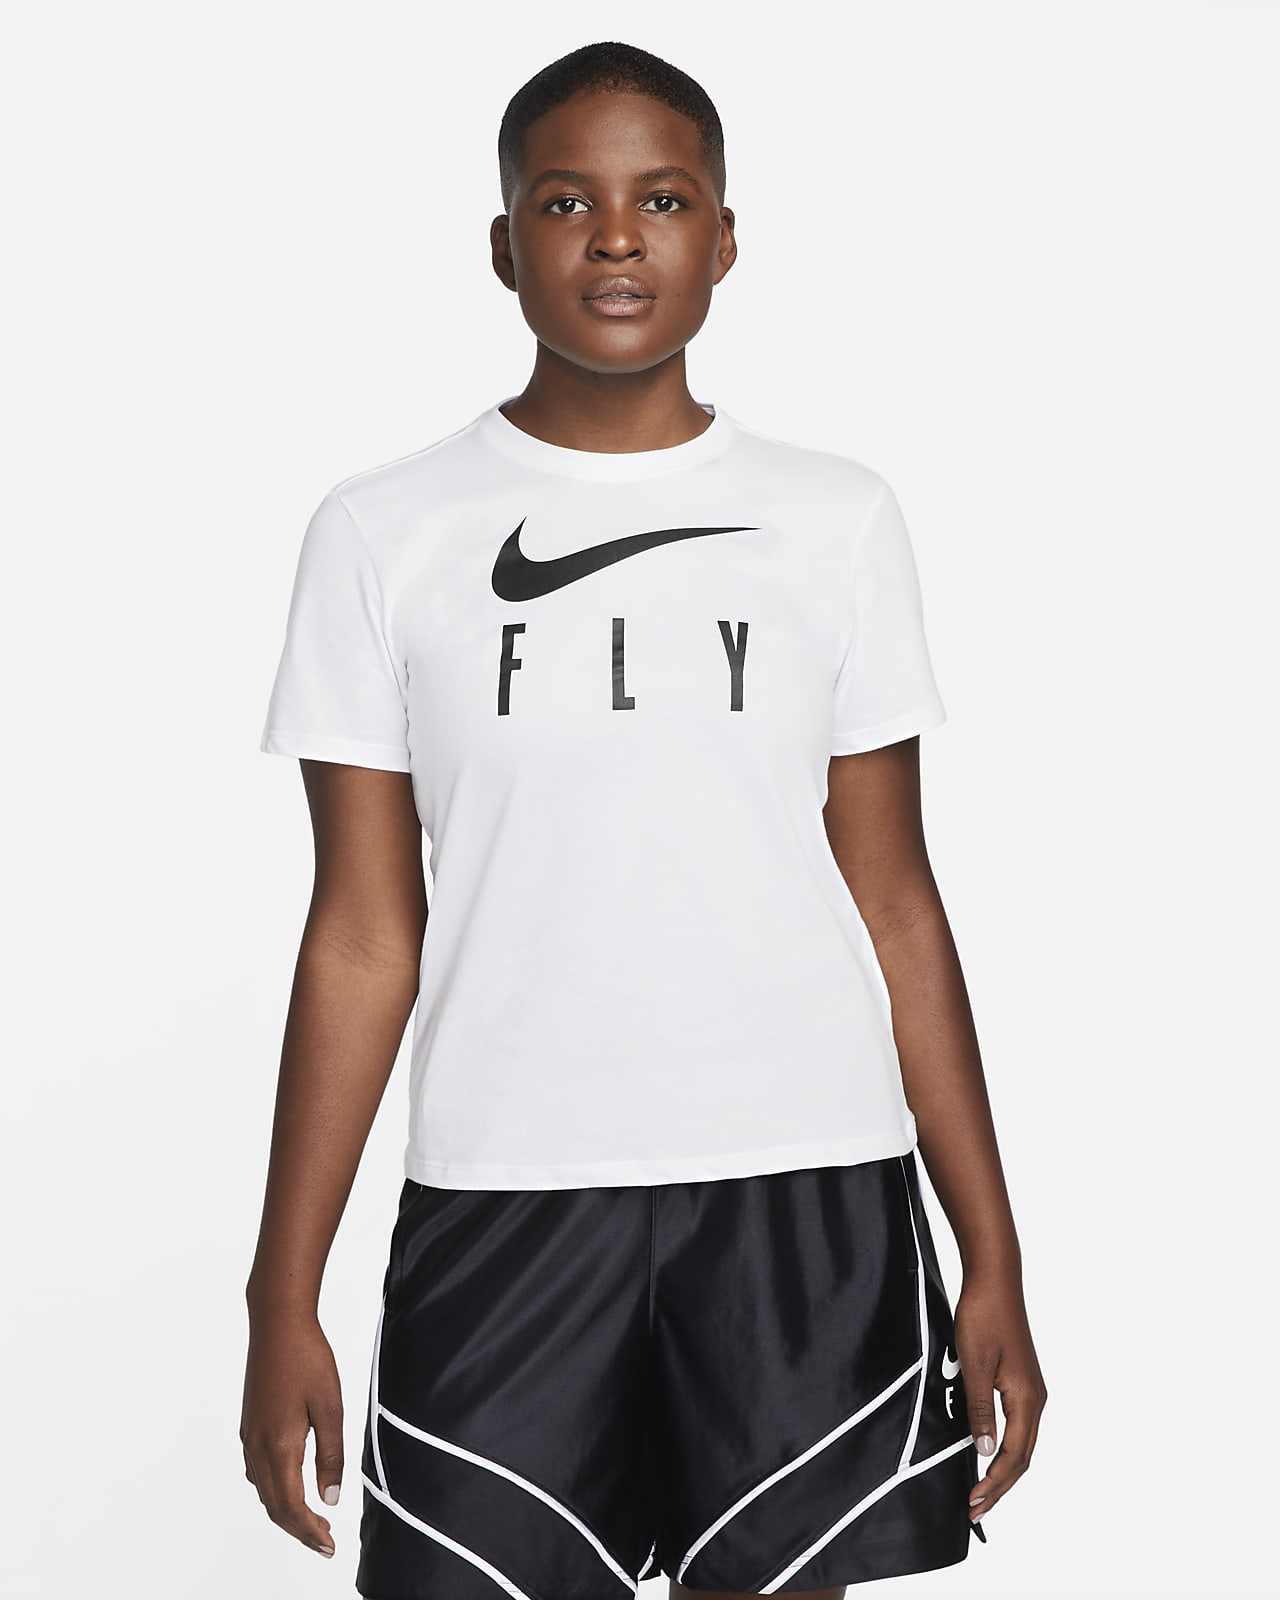 Nike Dri-FIT Swoosh Fly Women's Short-Sleeve T-Shirt